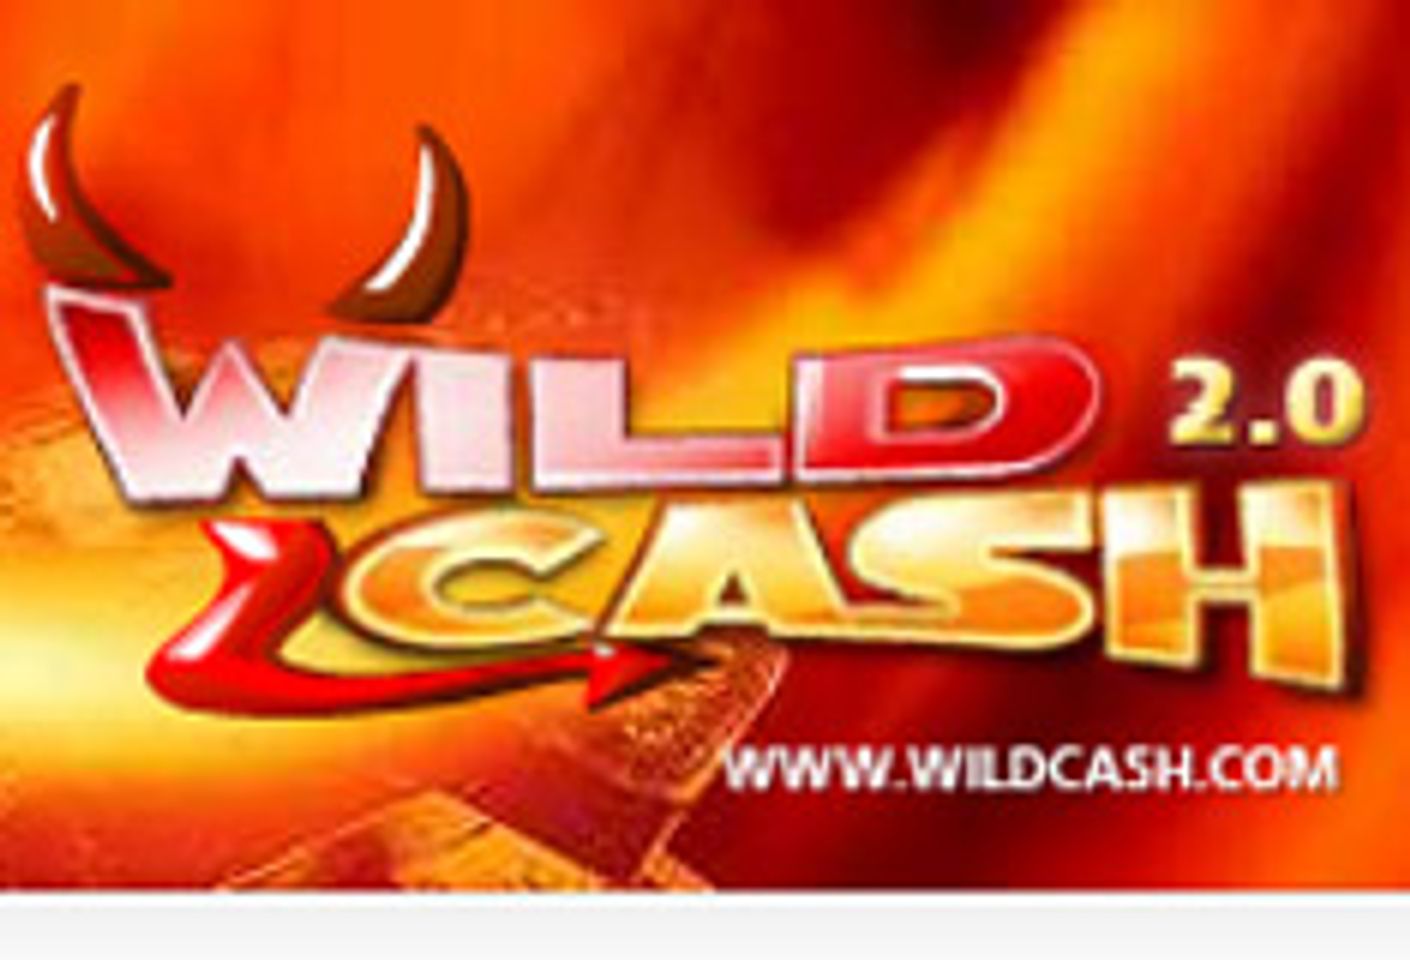 WildCash.com 2.0 Goes Live